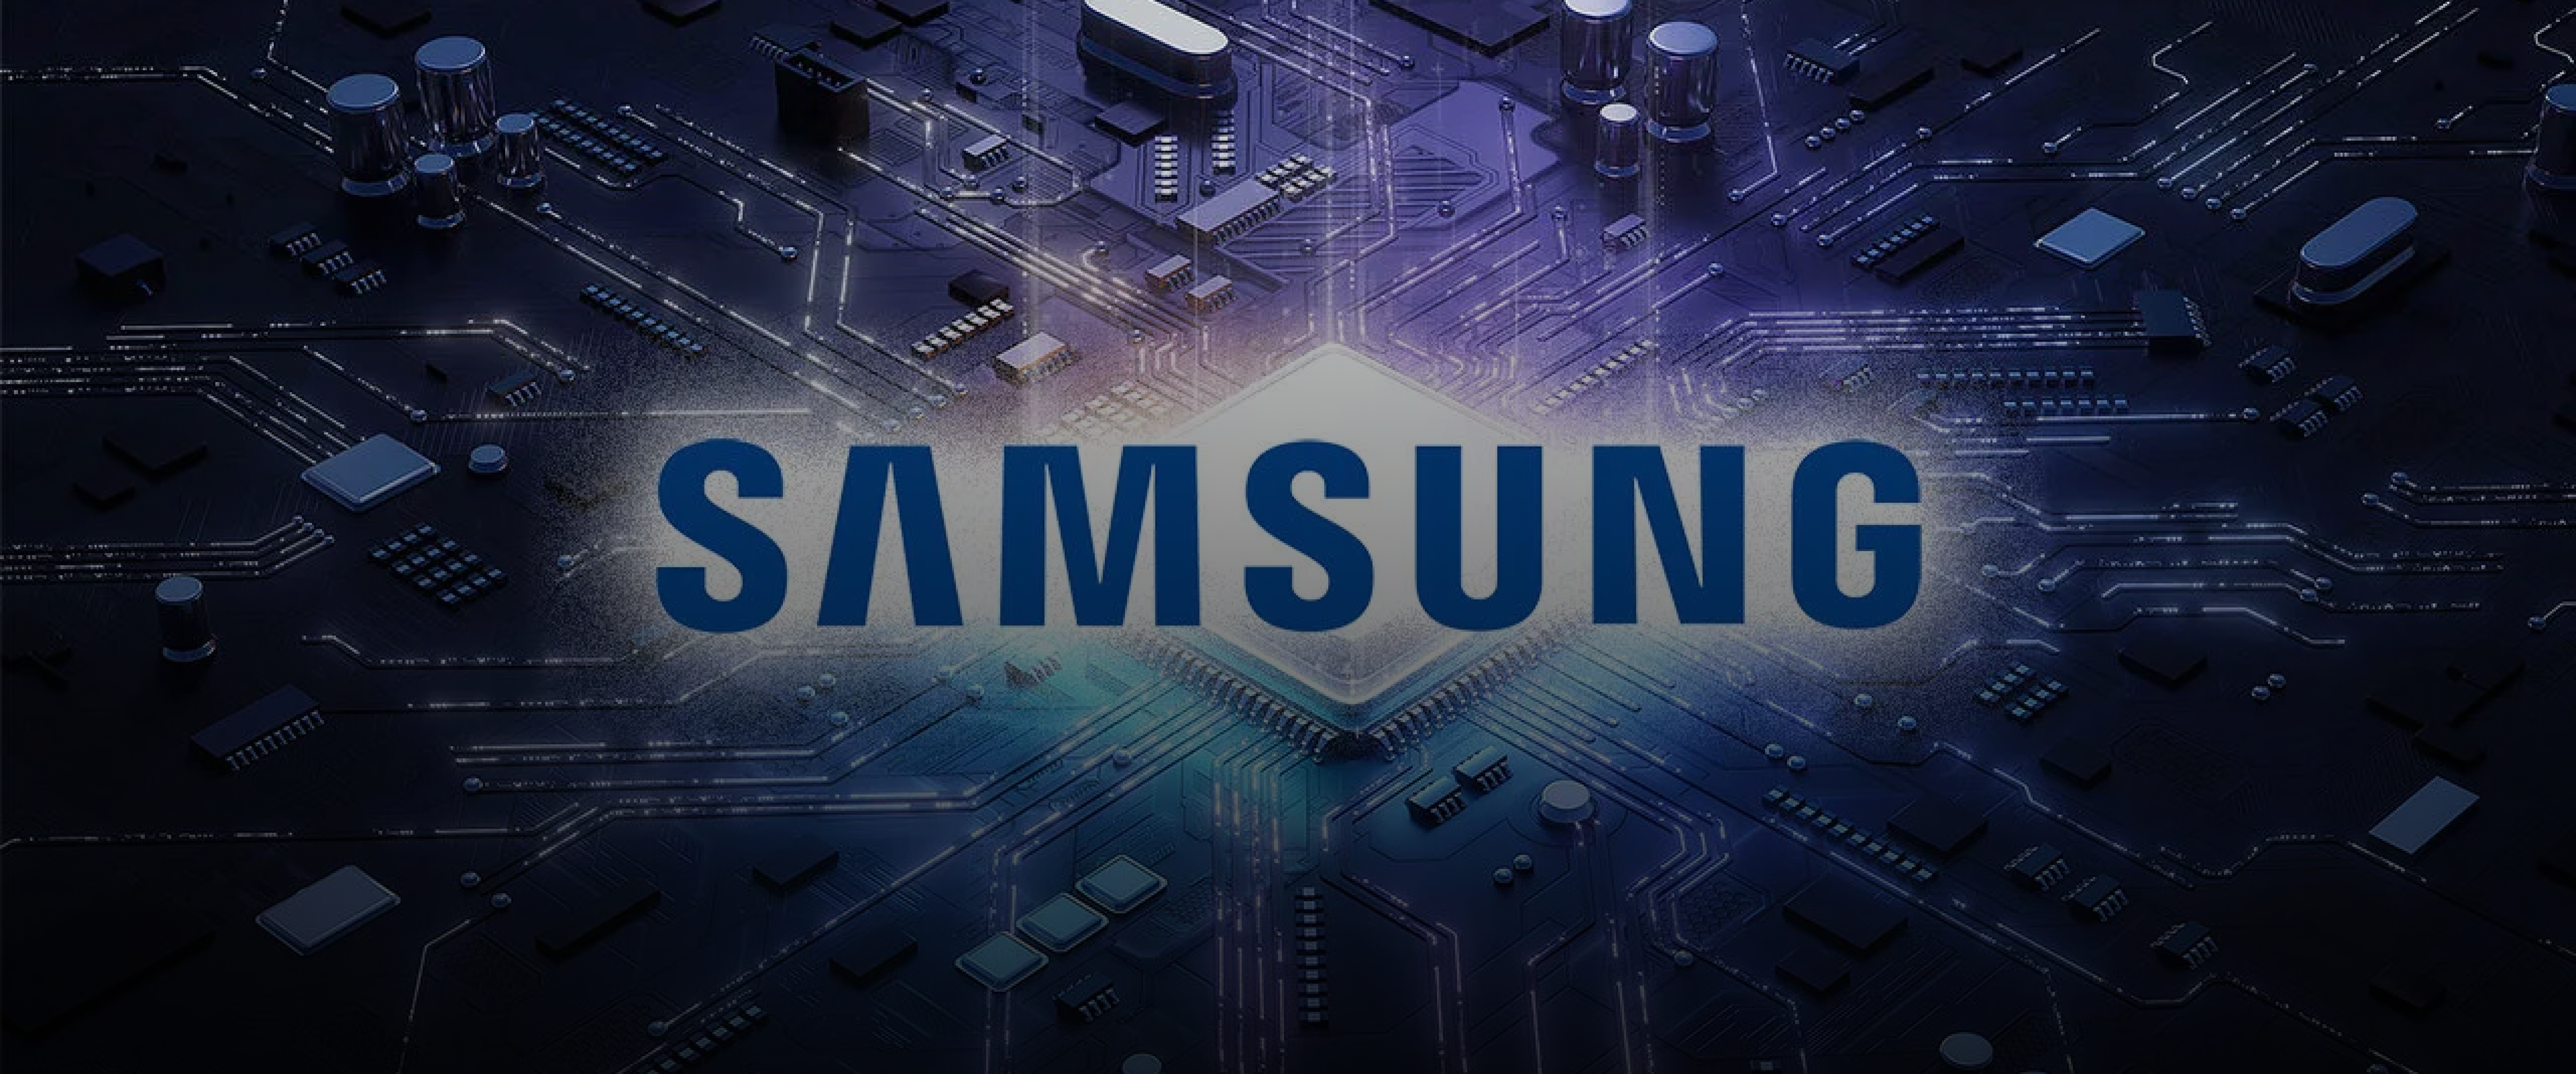 Samsung case study banner image